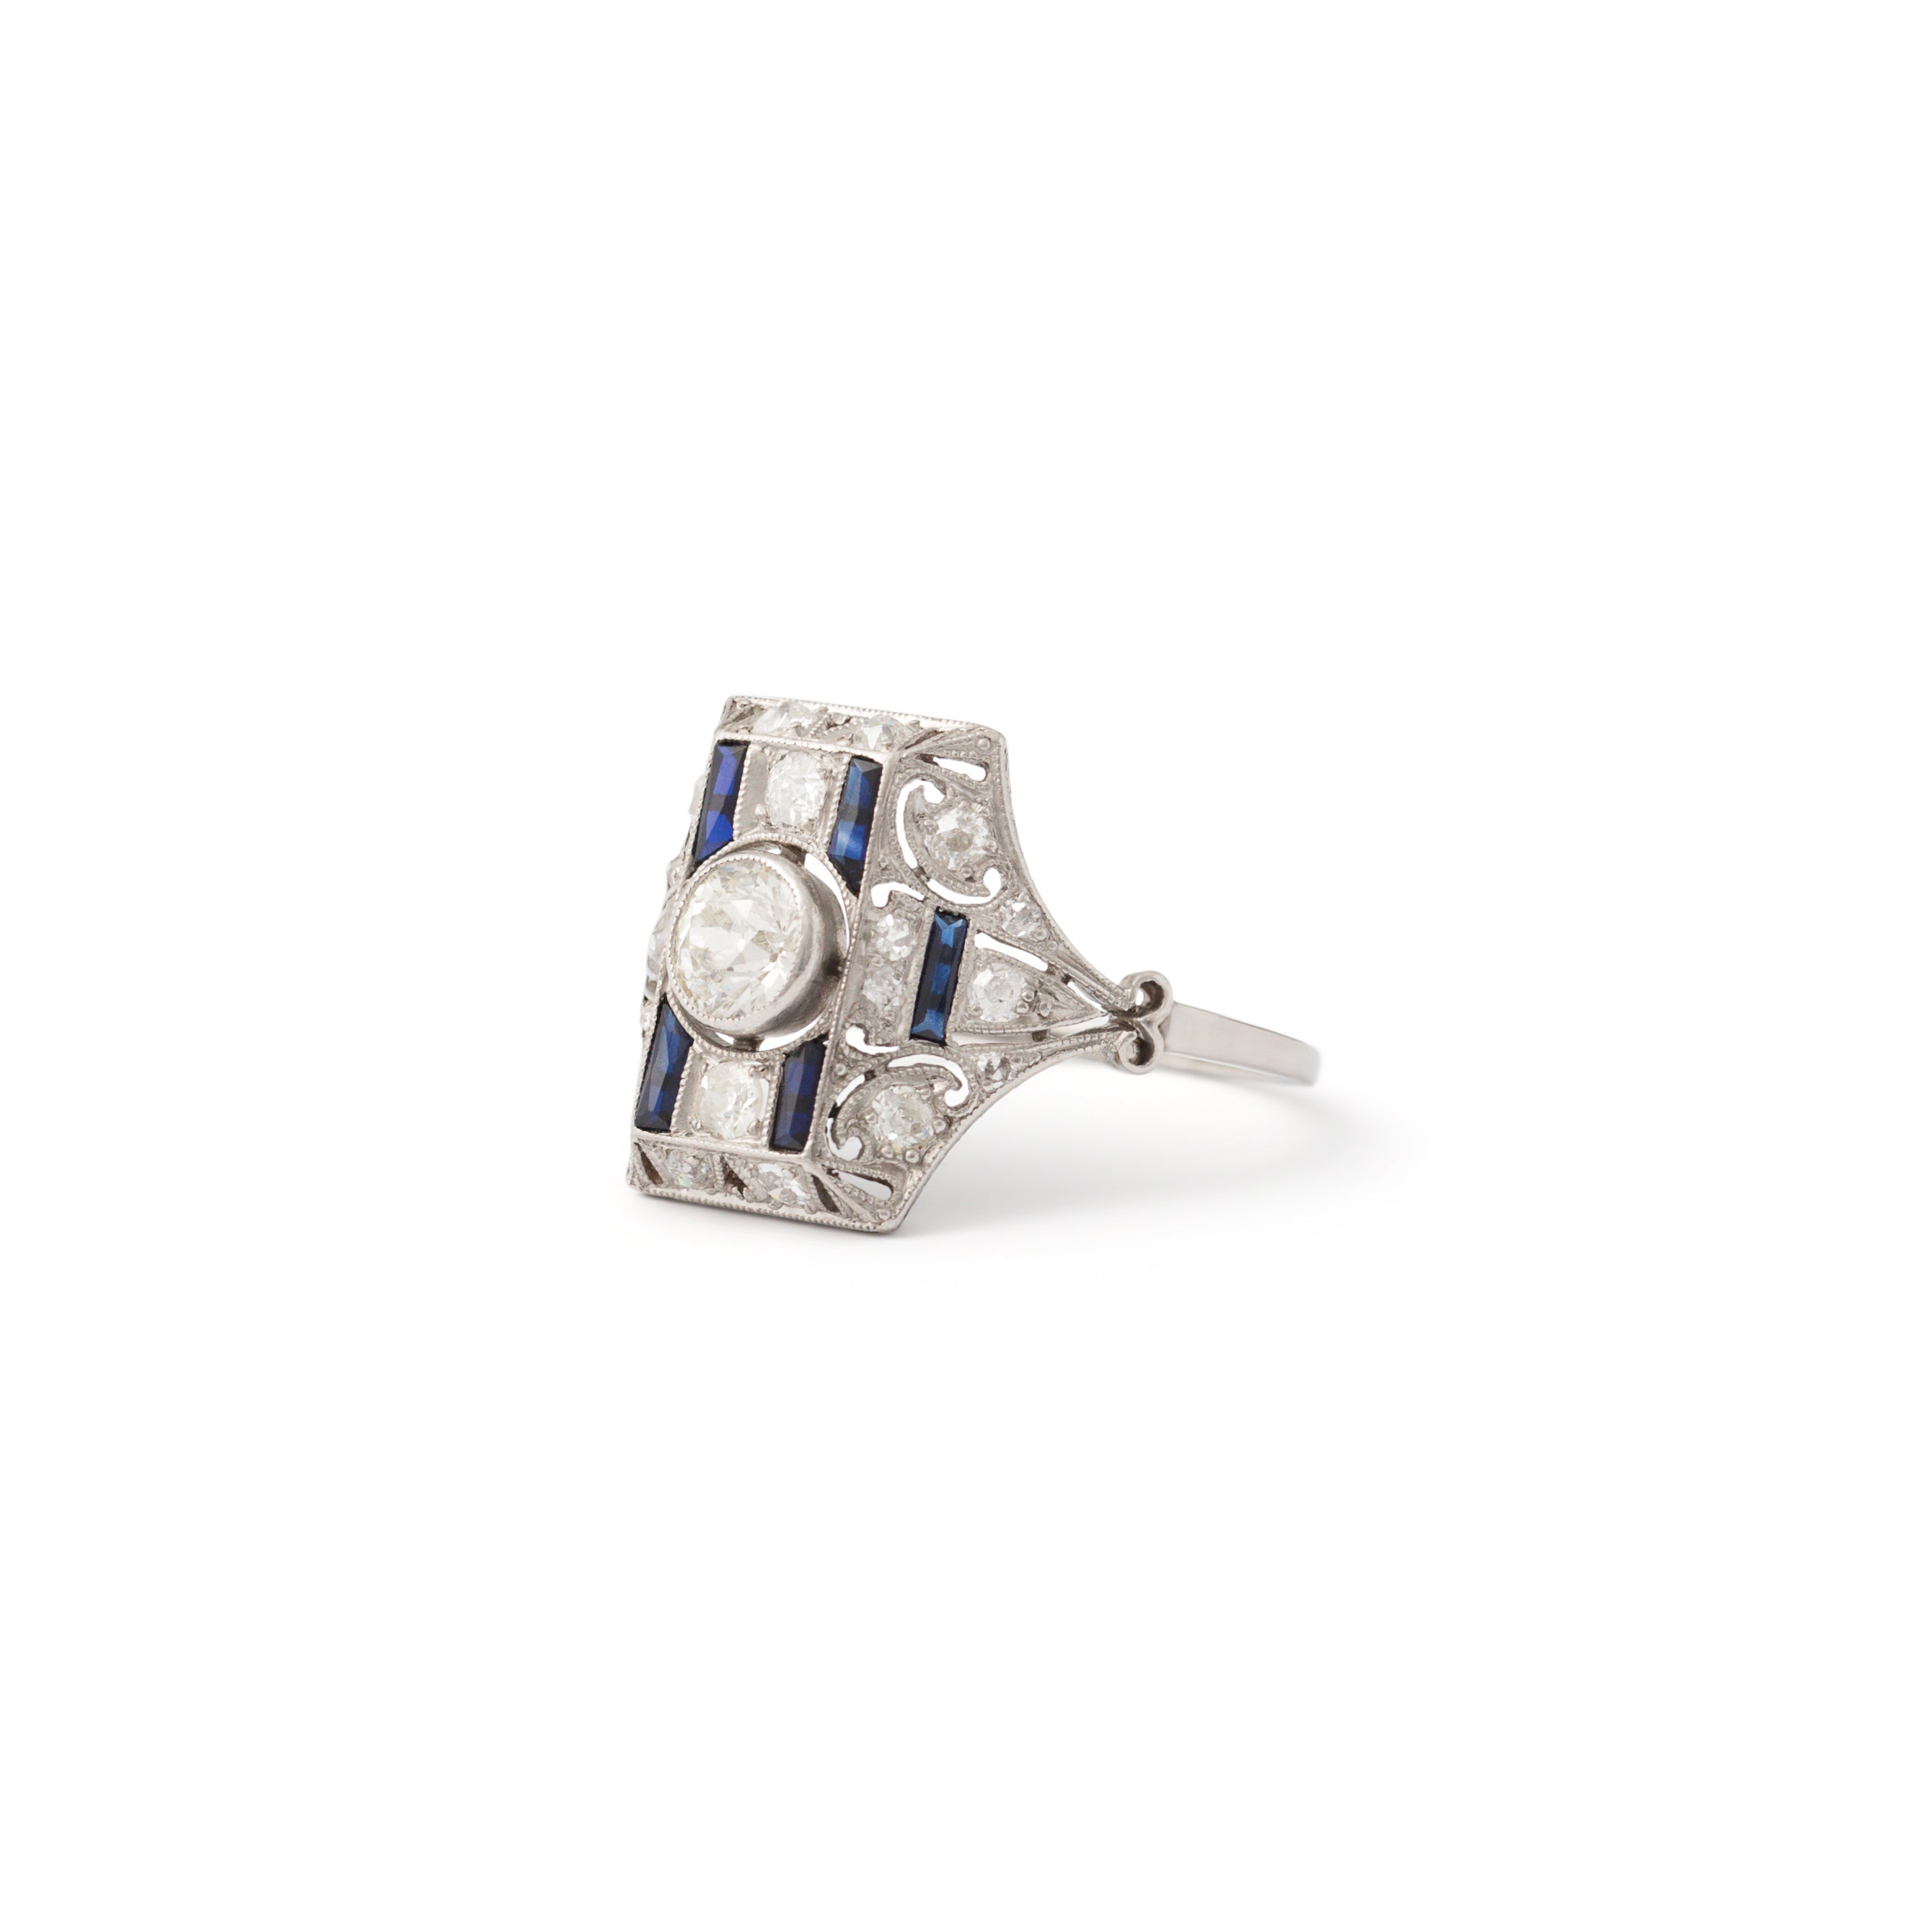 Austrian Art Deco Old European Cut Diamond and Sapphires Platinum Ring